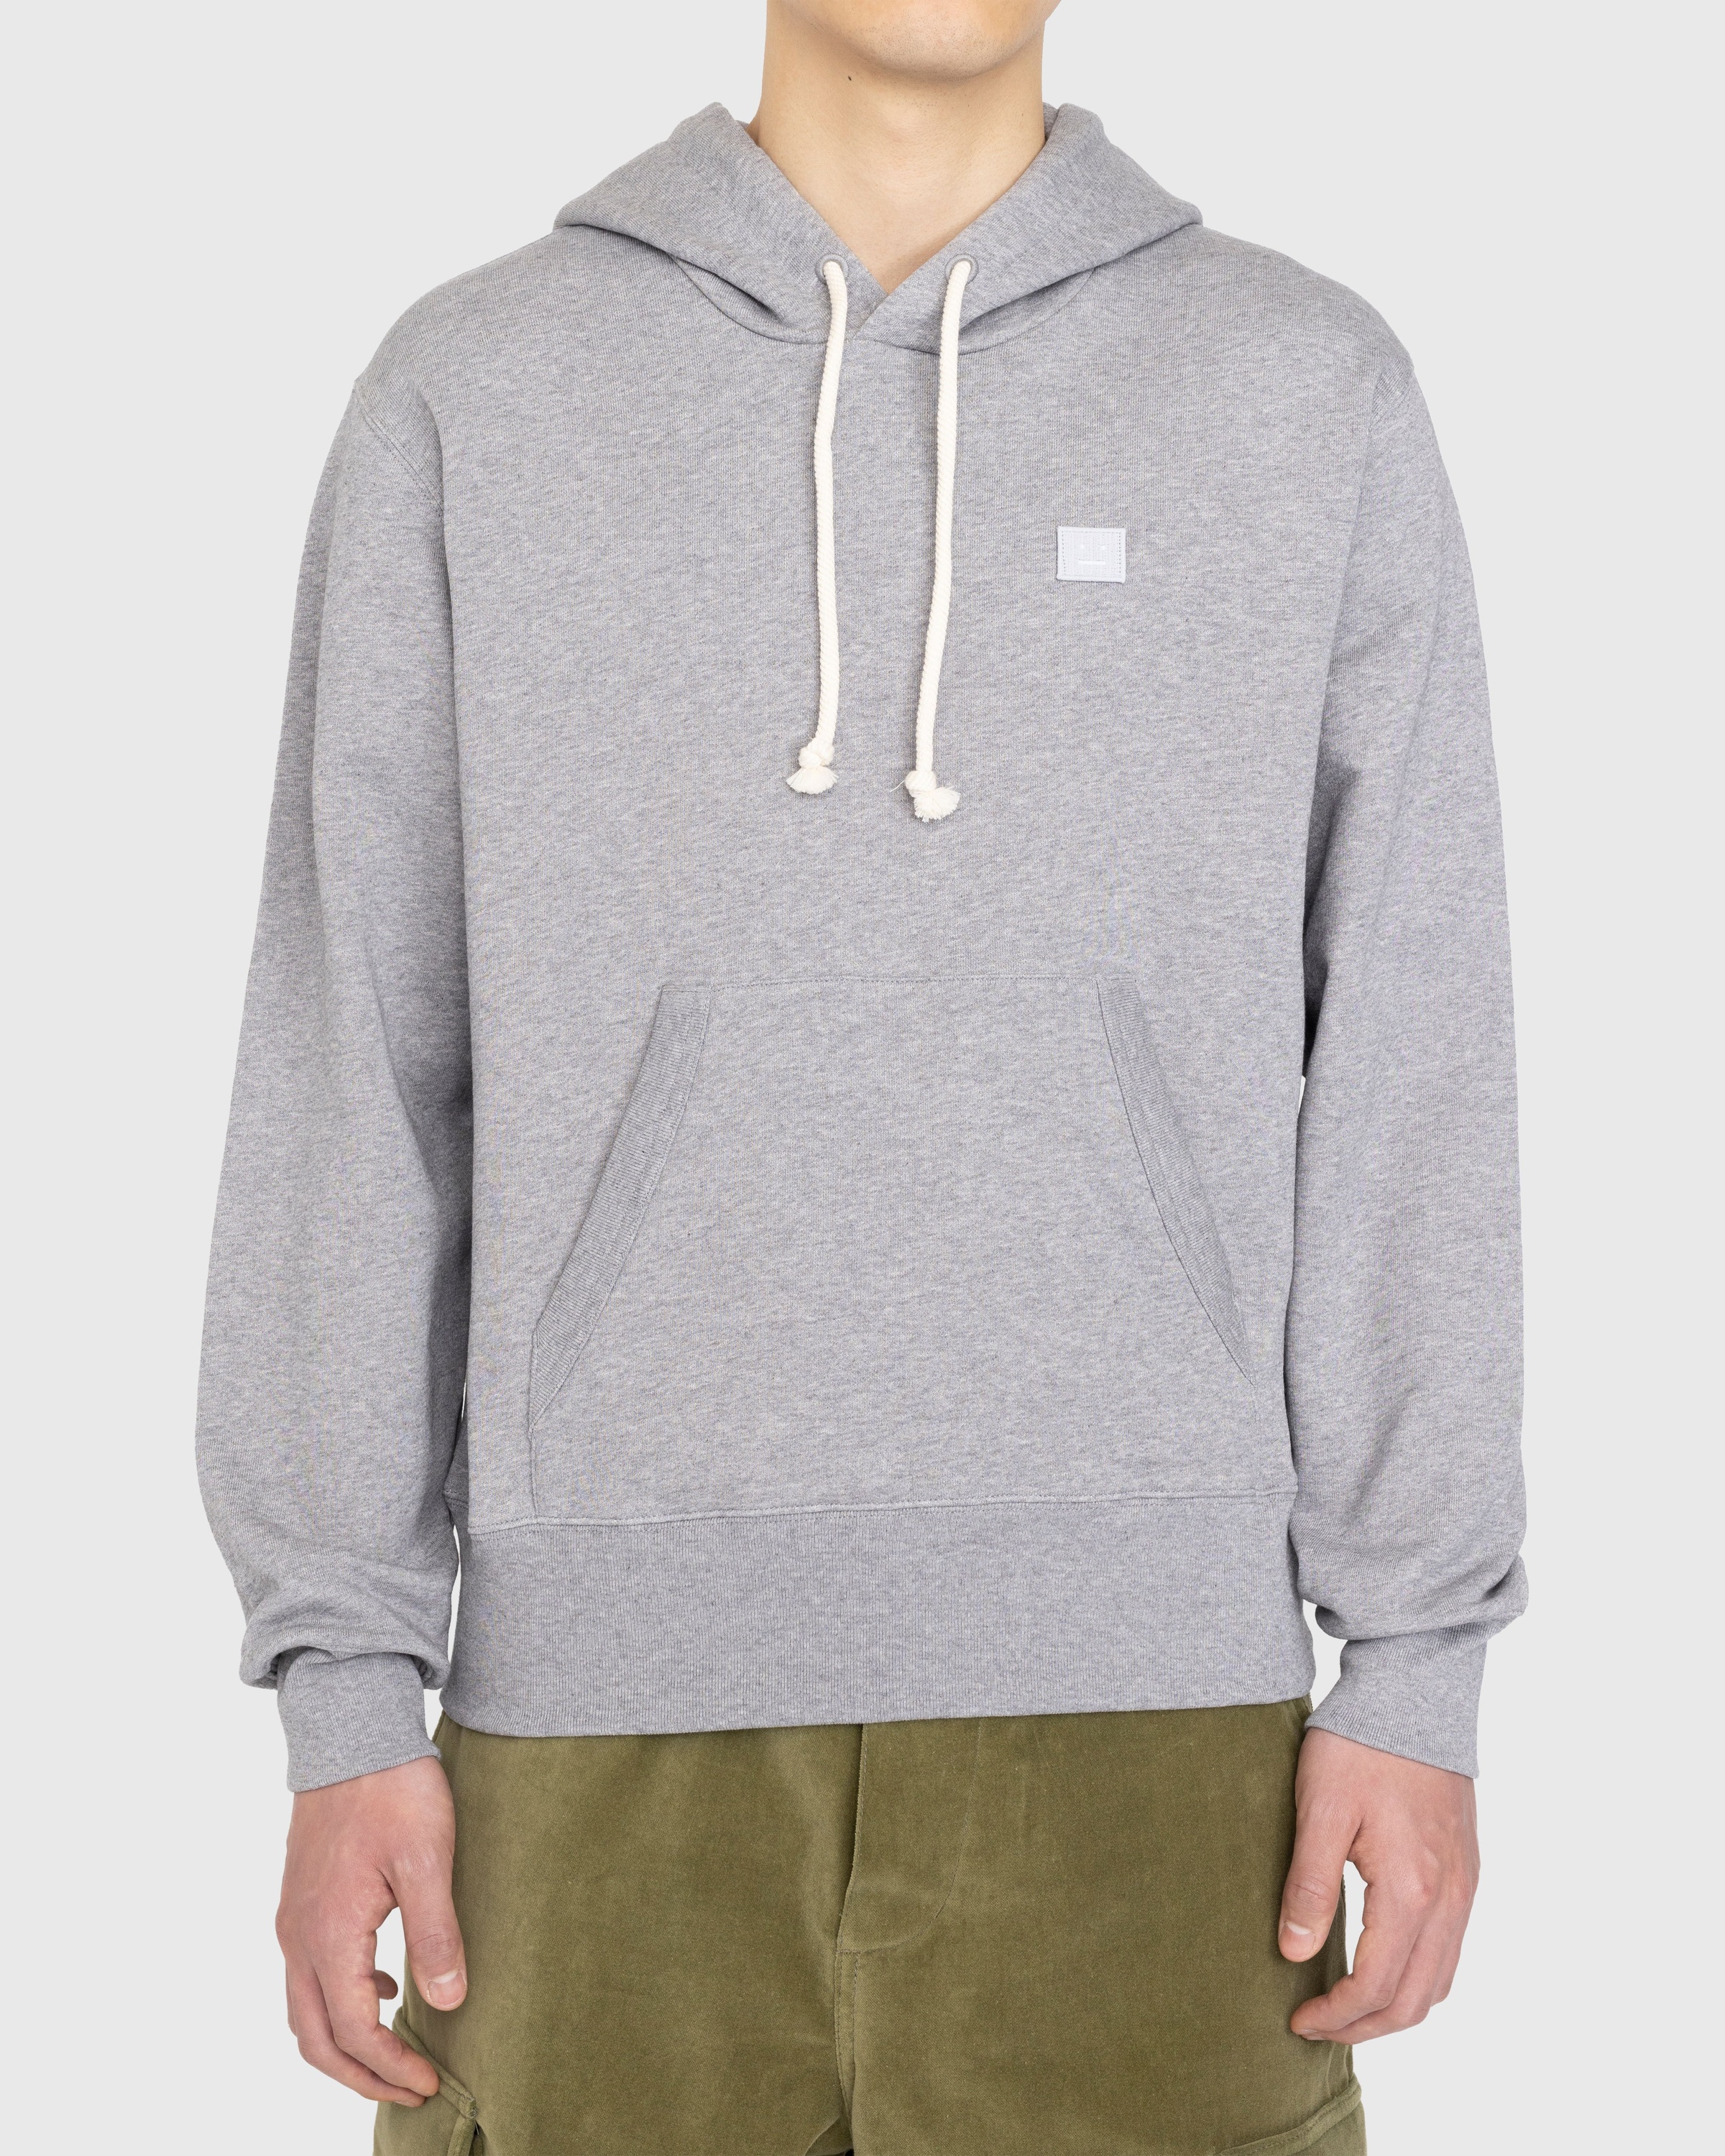 Acne Studios – Organic Cotton Hooded Sweatshirt Grey - Hoodies - Grey - Image 2